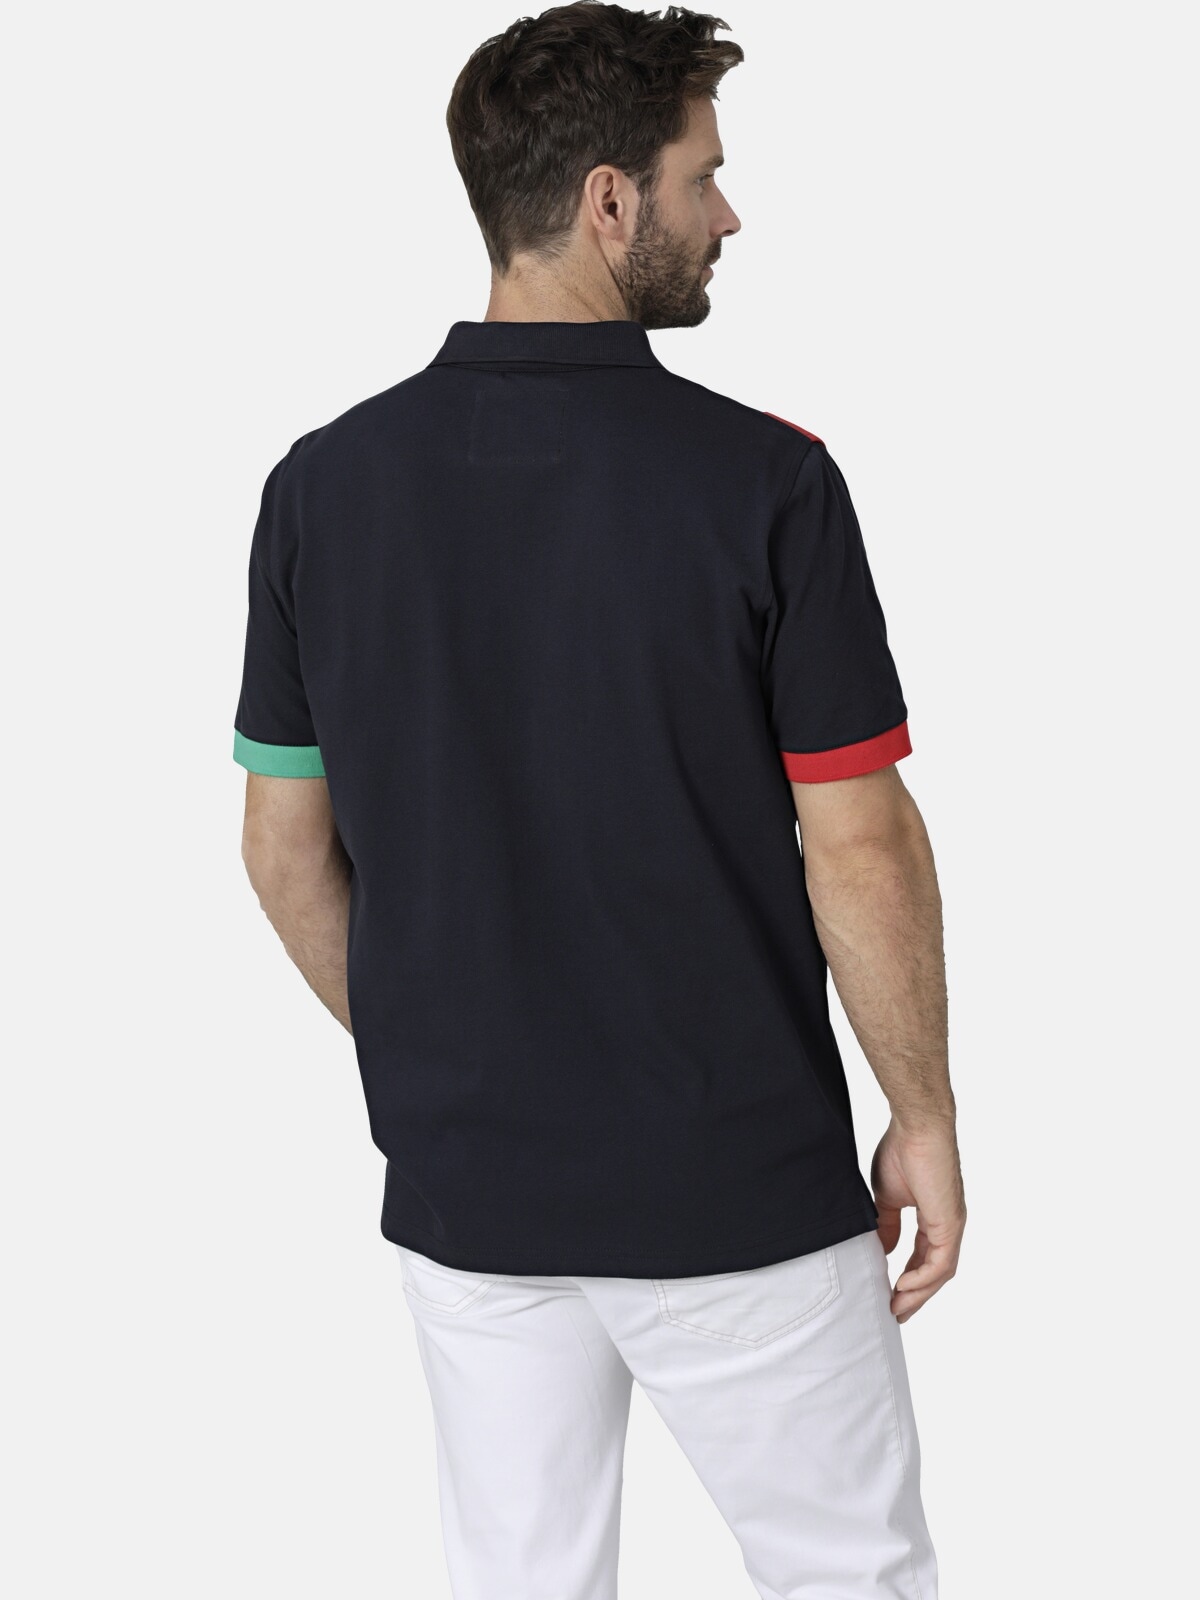 Babista Poloshirt »Poloshirt FLORENZO«, (1 tlg.), aus bügelfreiem Material